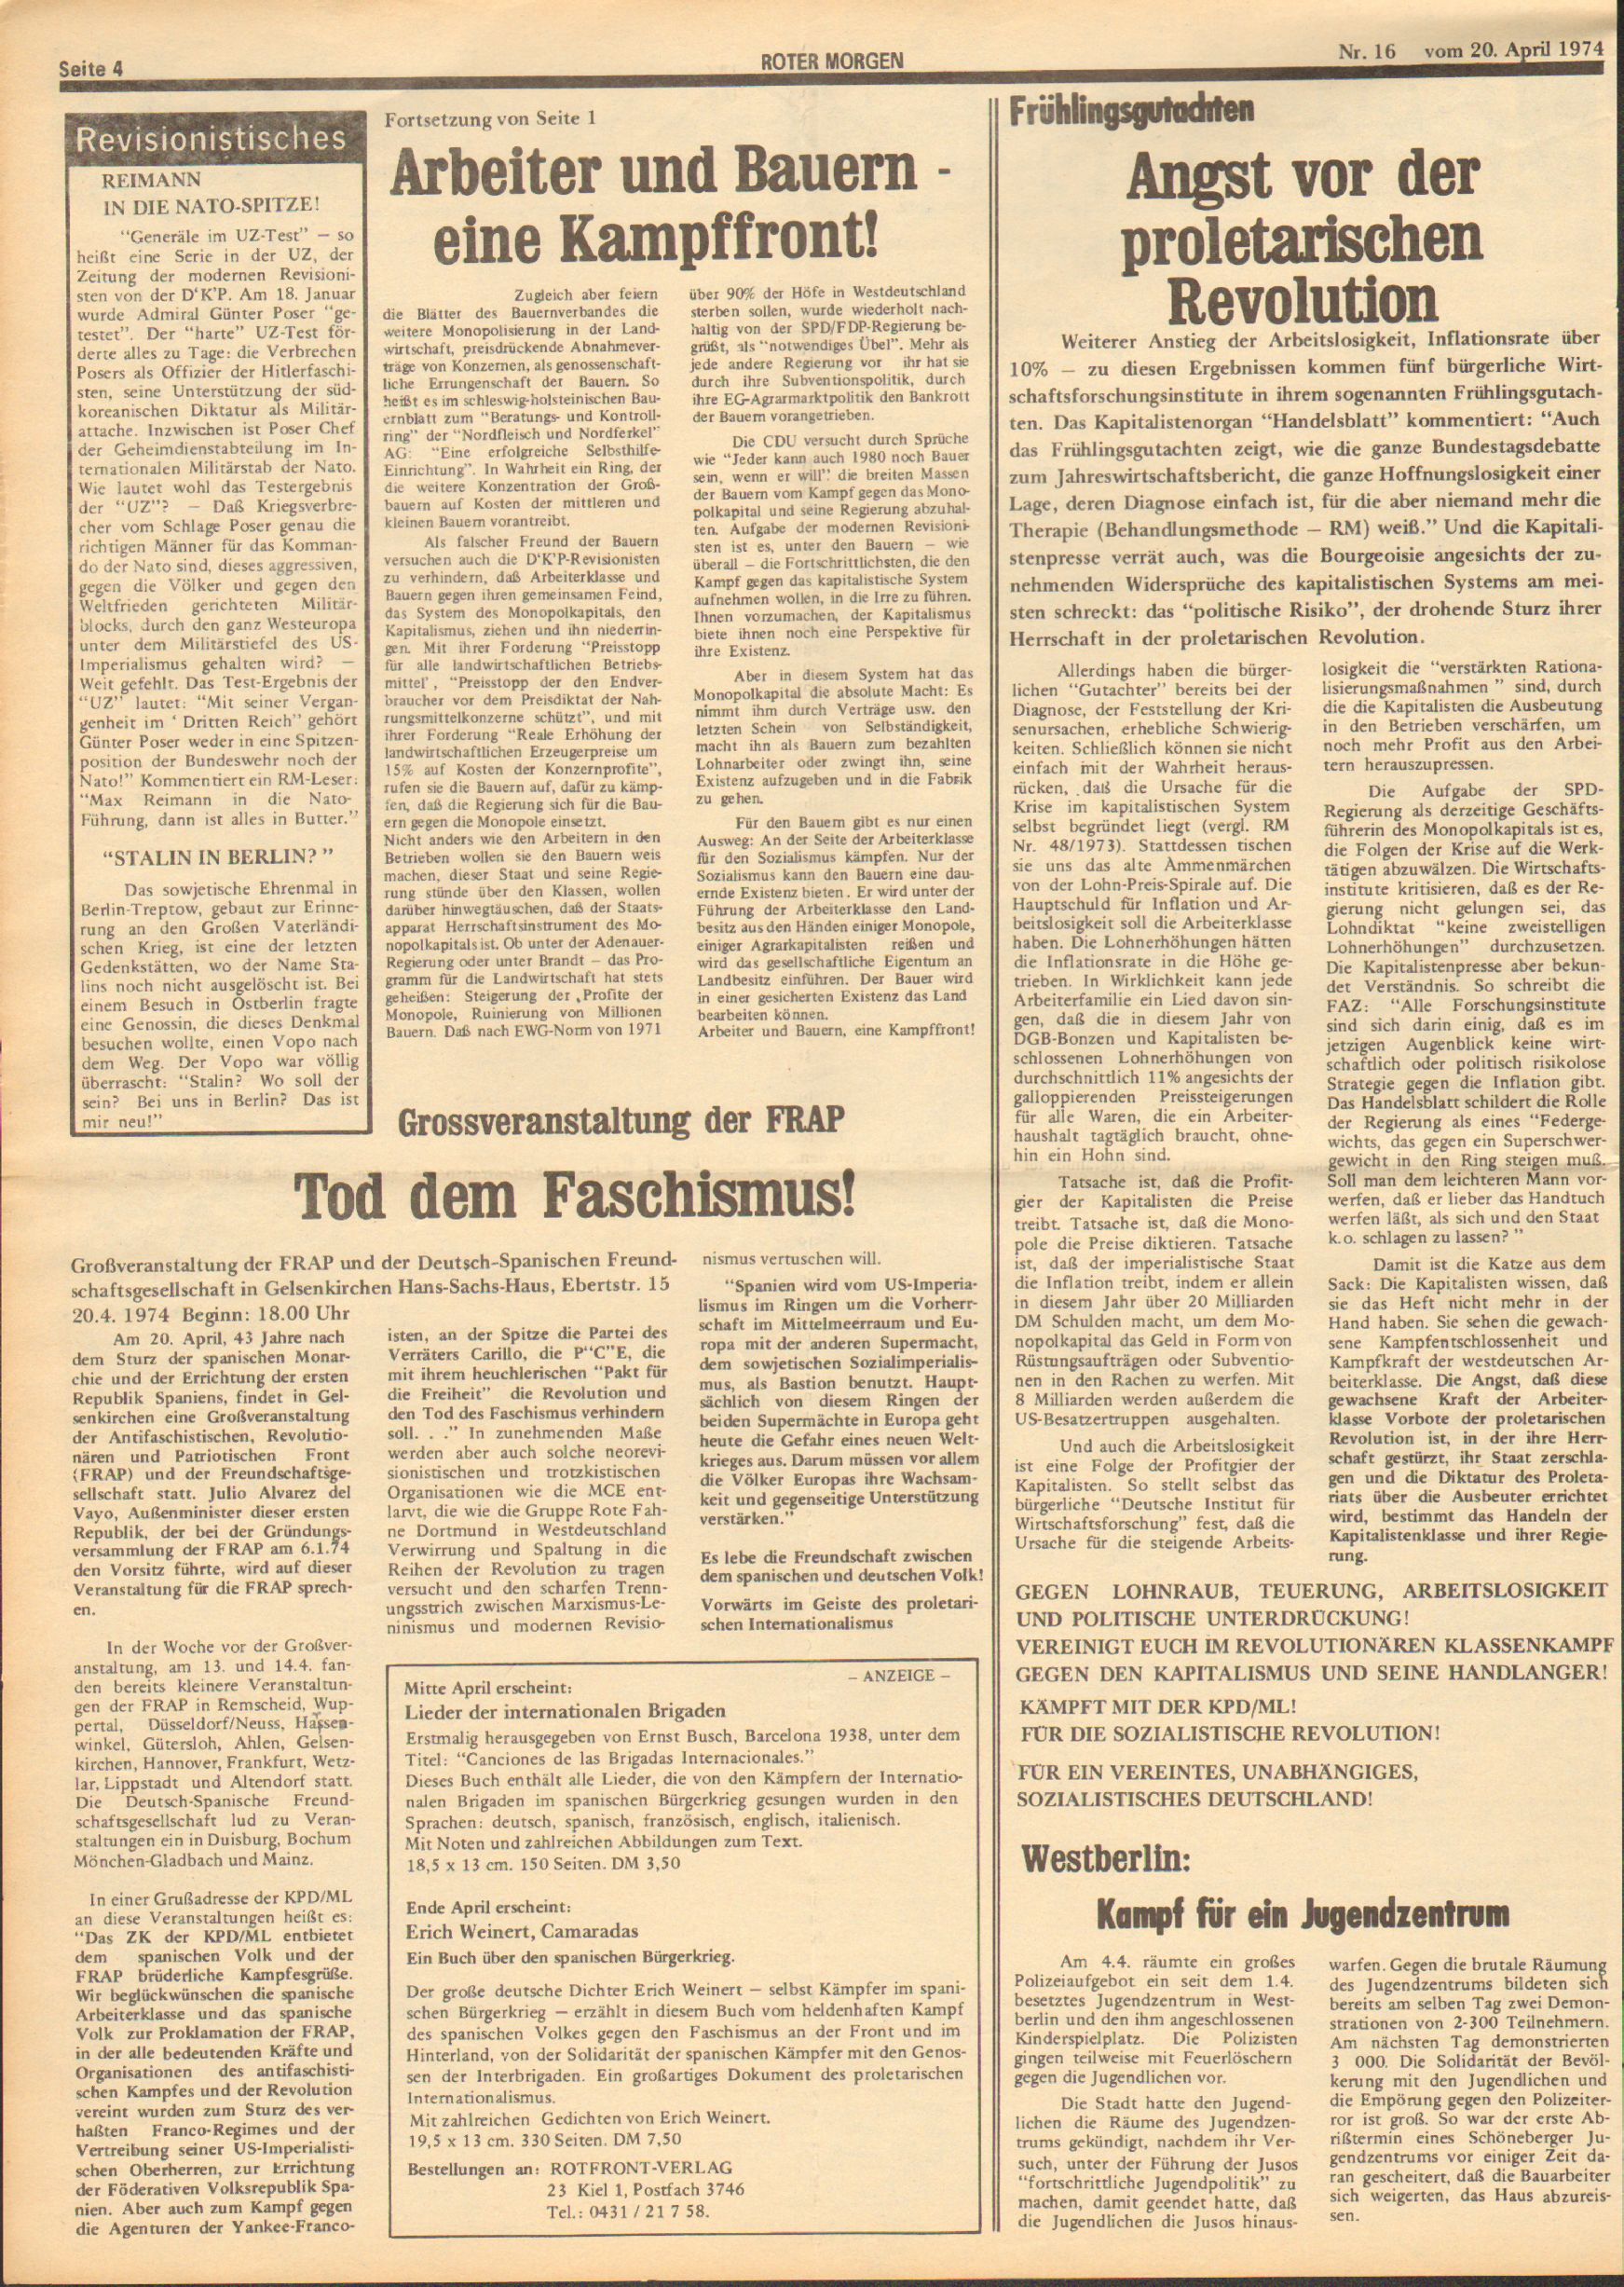 Roter Morgen, 8. Jg., 20. April 1974, Nr. 16, Seite 4